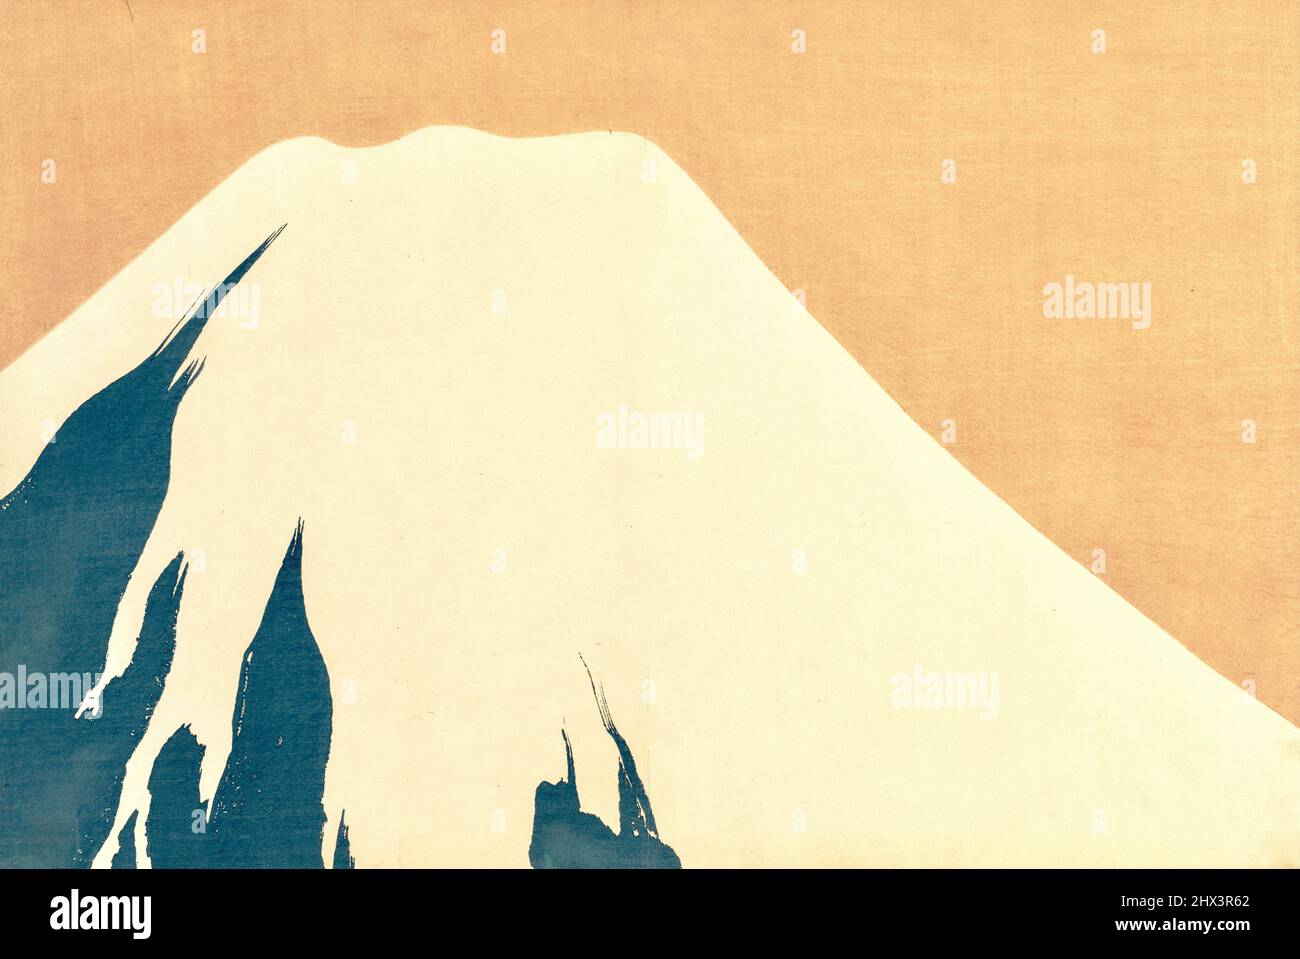 Kamisaka Sekka - Monte Fuji - cima coperta di neve - 1909-1910 Foto Stock